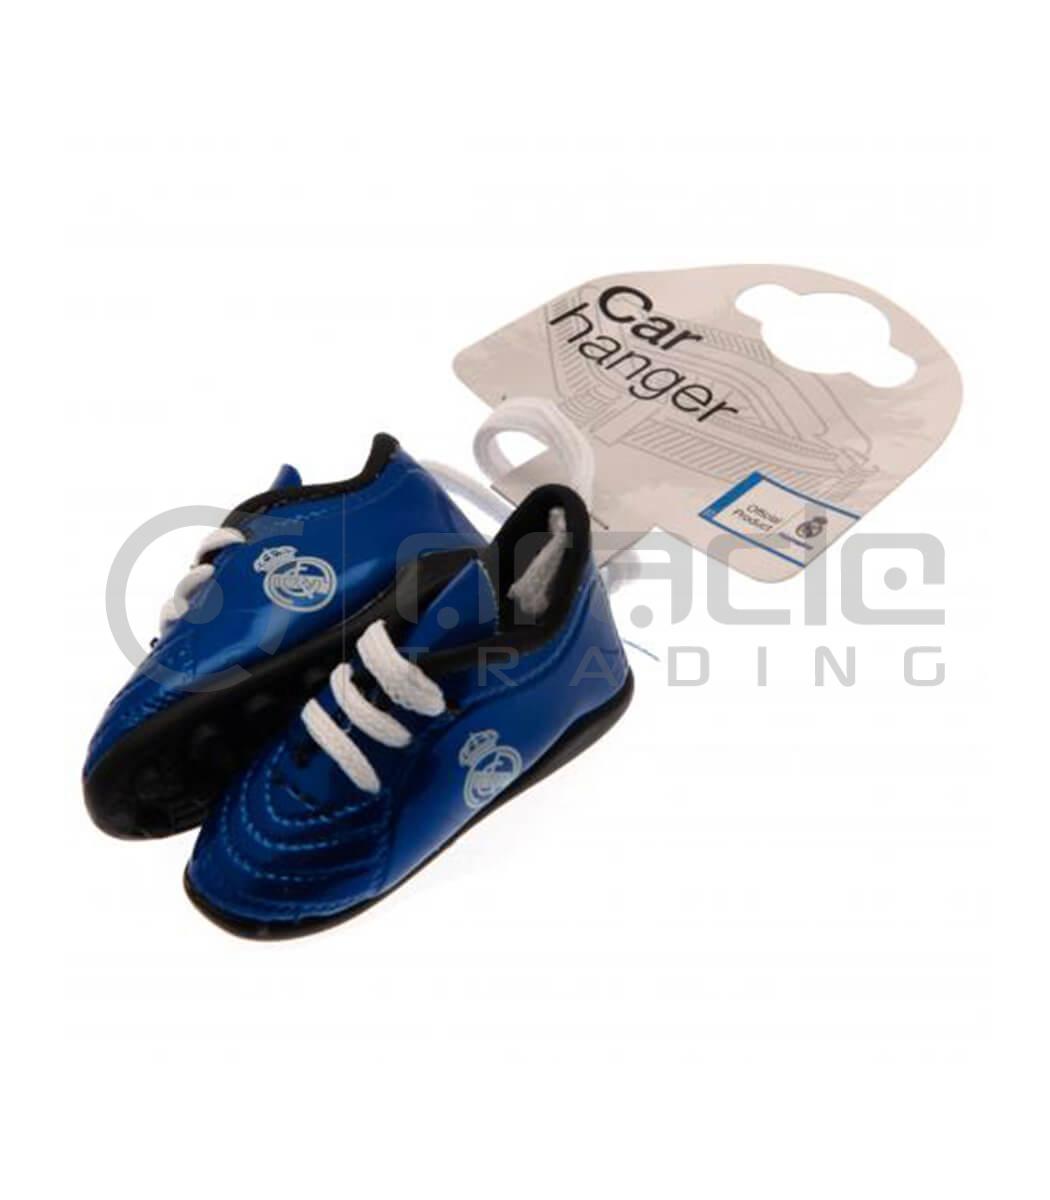 Real Madrid Shoe Hangers